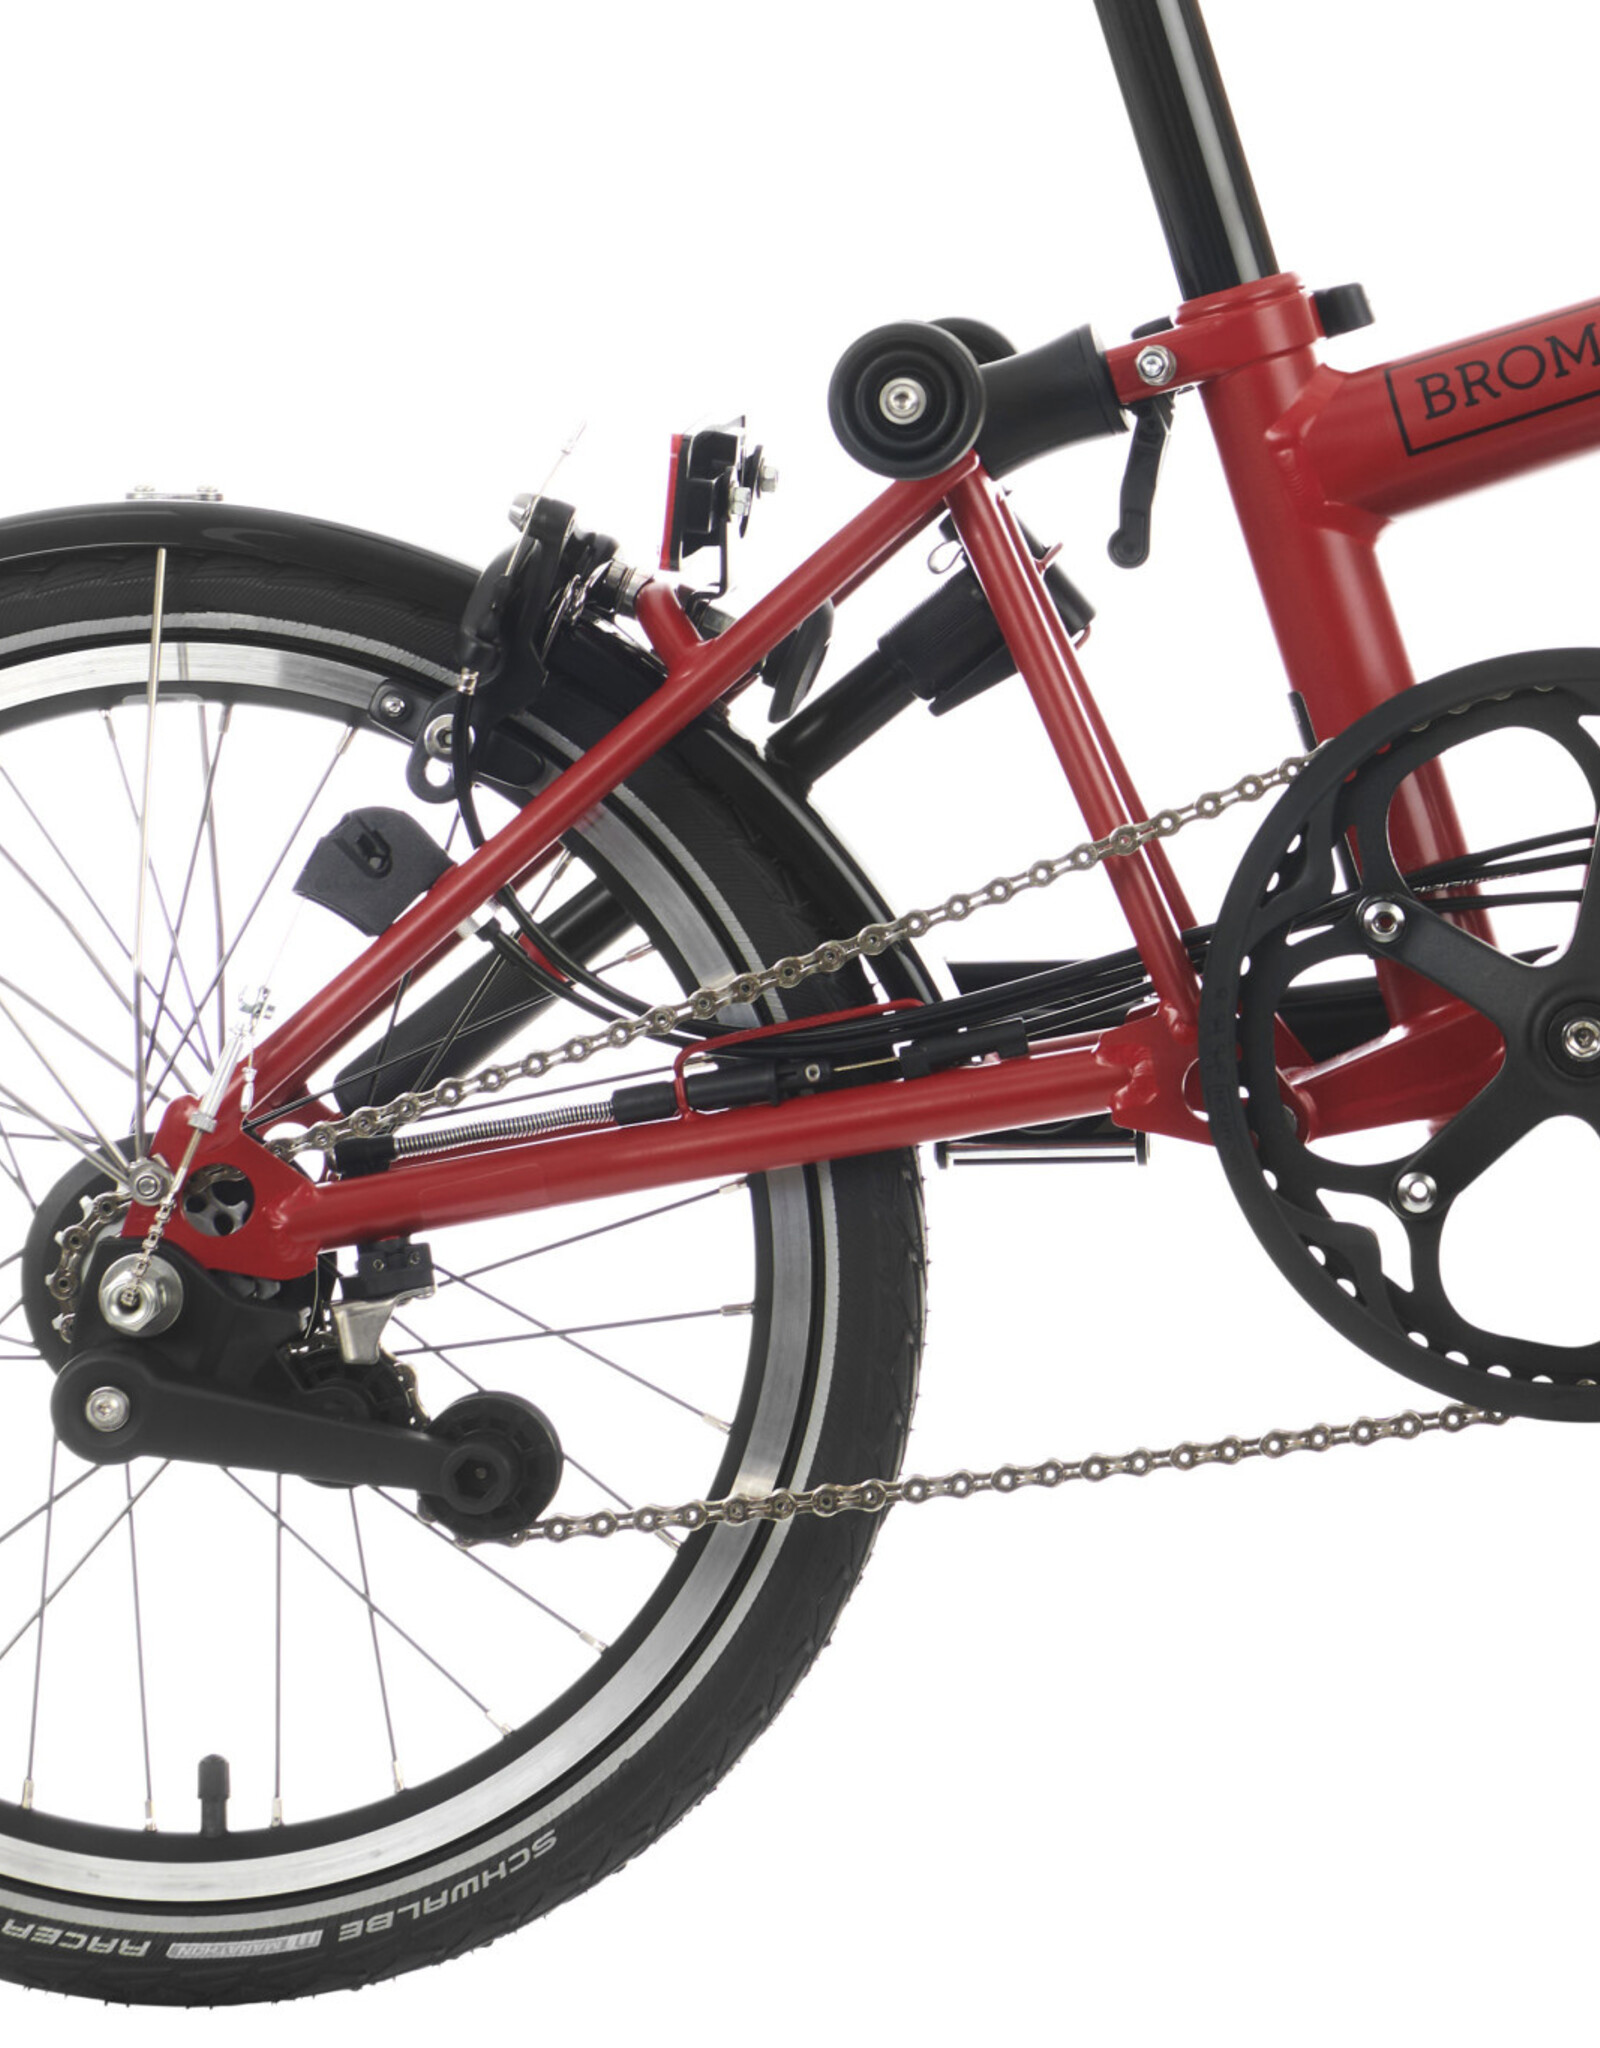 Brompton Brompton - Bike - C line 6 speed, House Red, H handlebar, Extended Seatpost, Black Edition